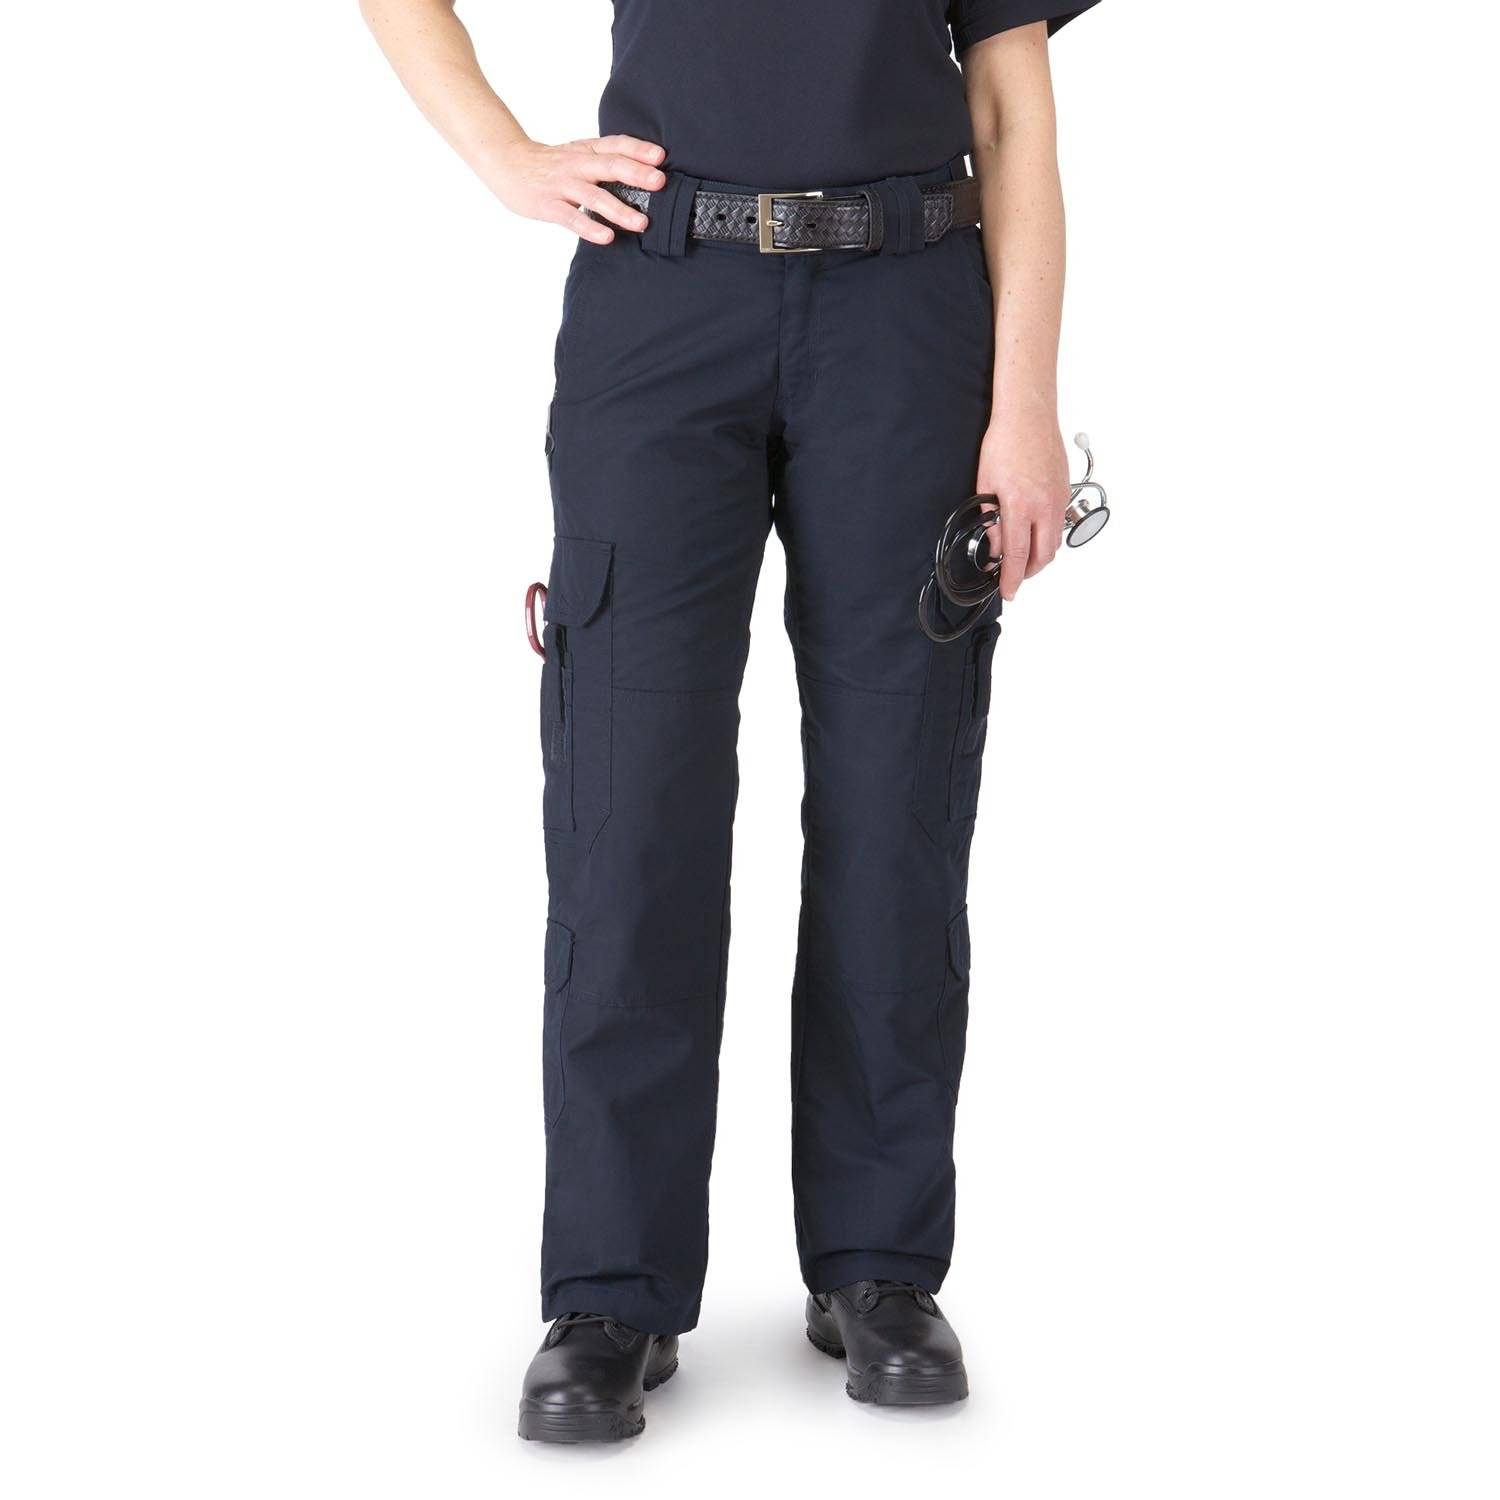 5.11 Tactical Women's Taclite EMS Pant.